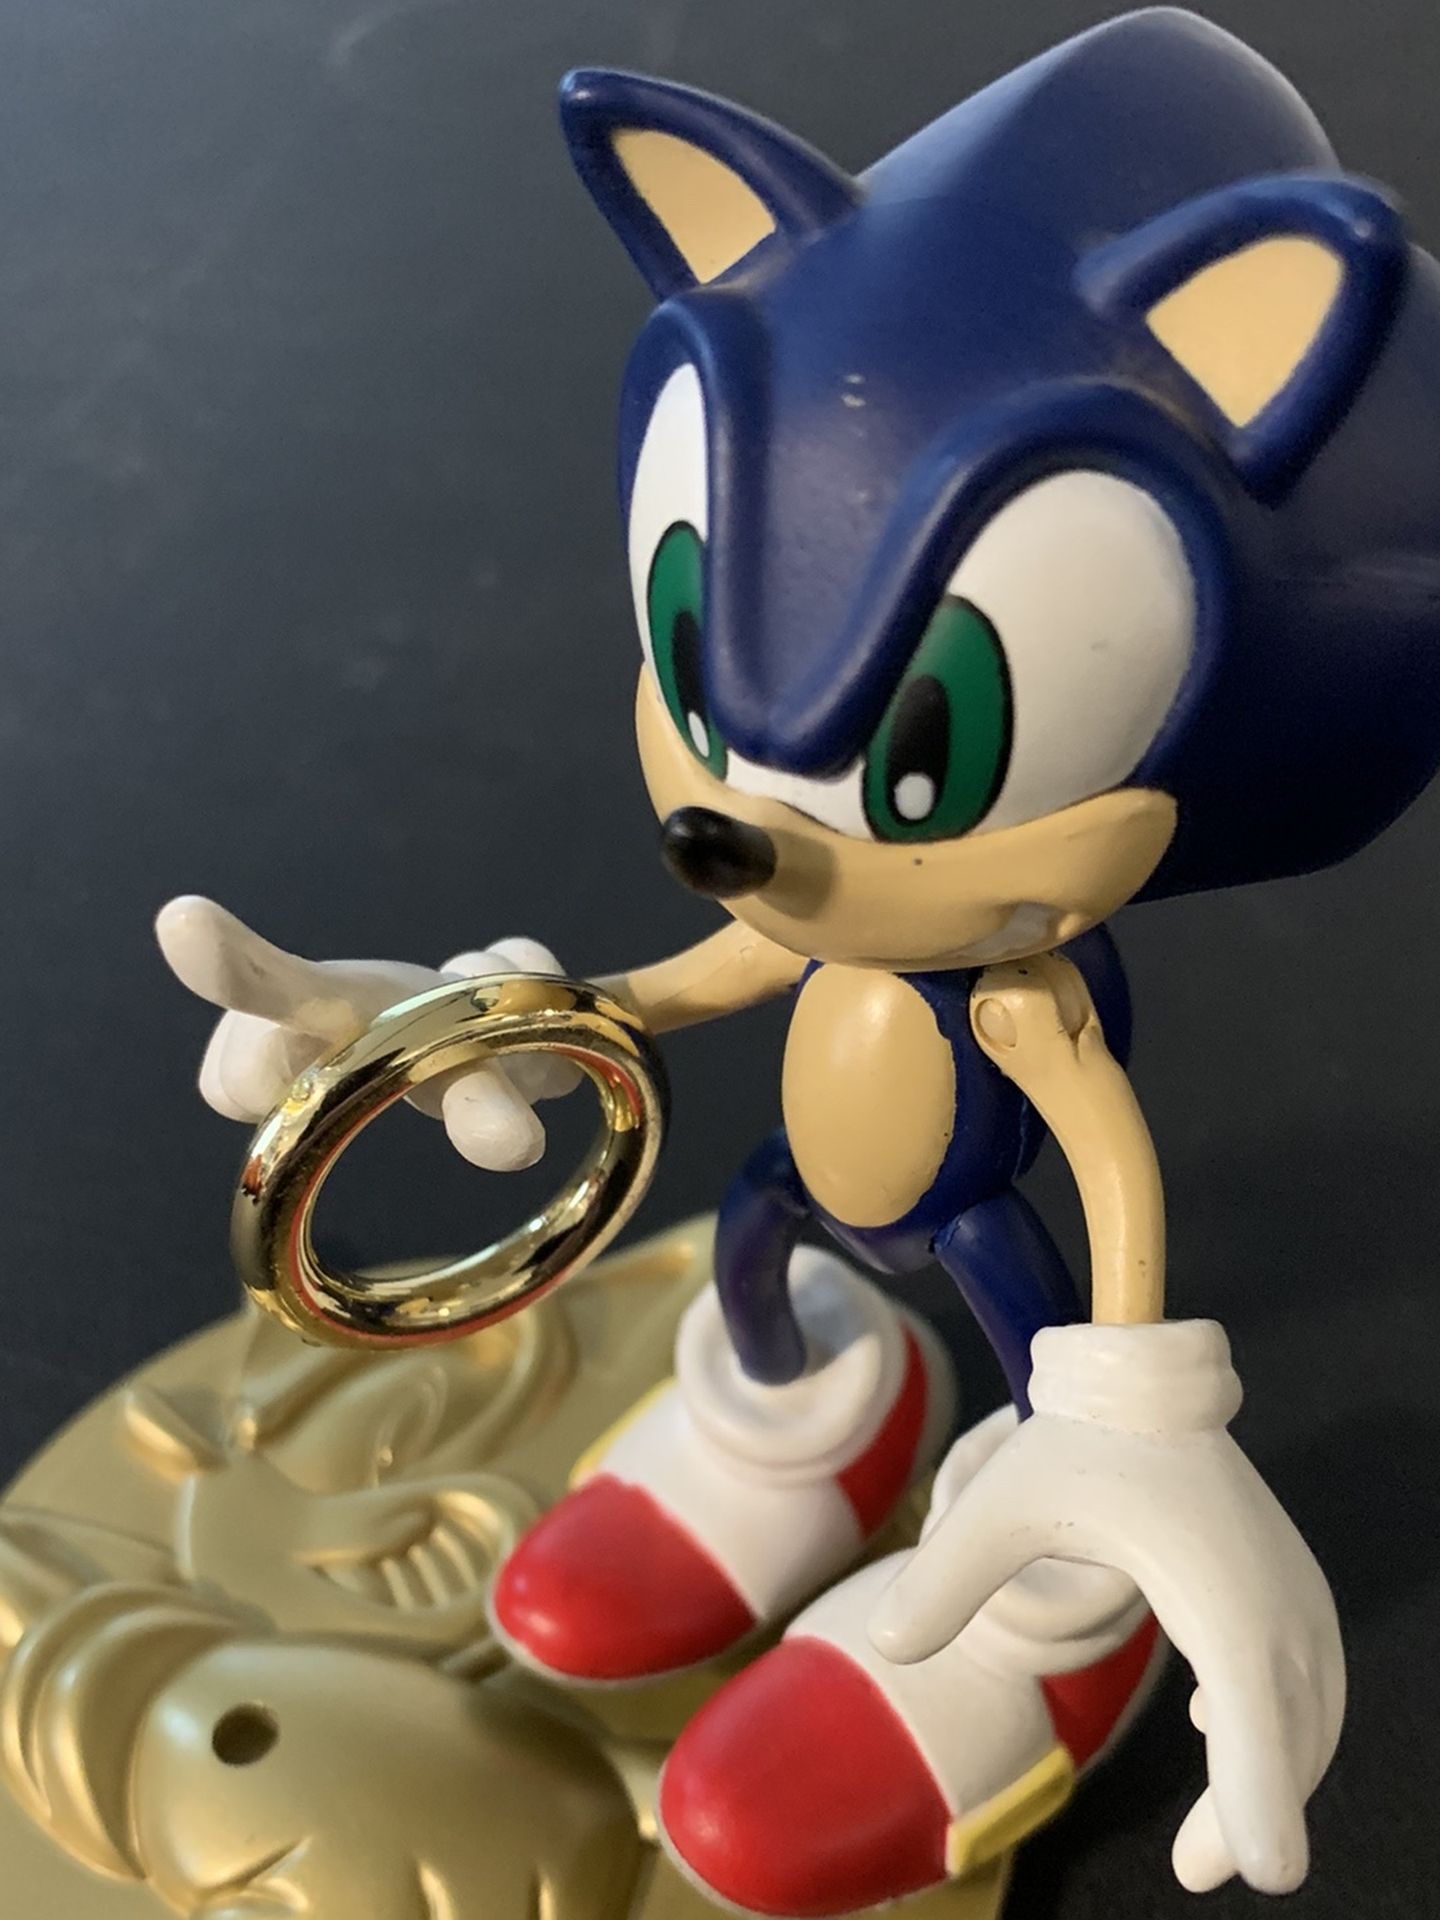 1999 Resaurus Sonic The Hedgehog 4” Action Figure